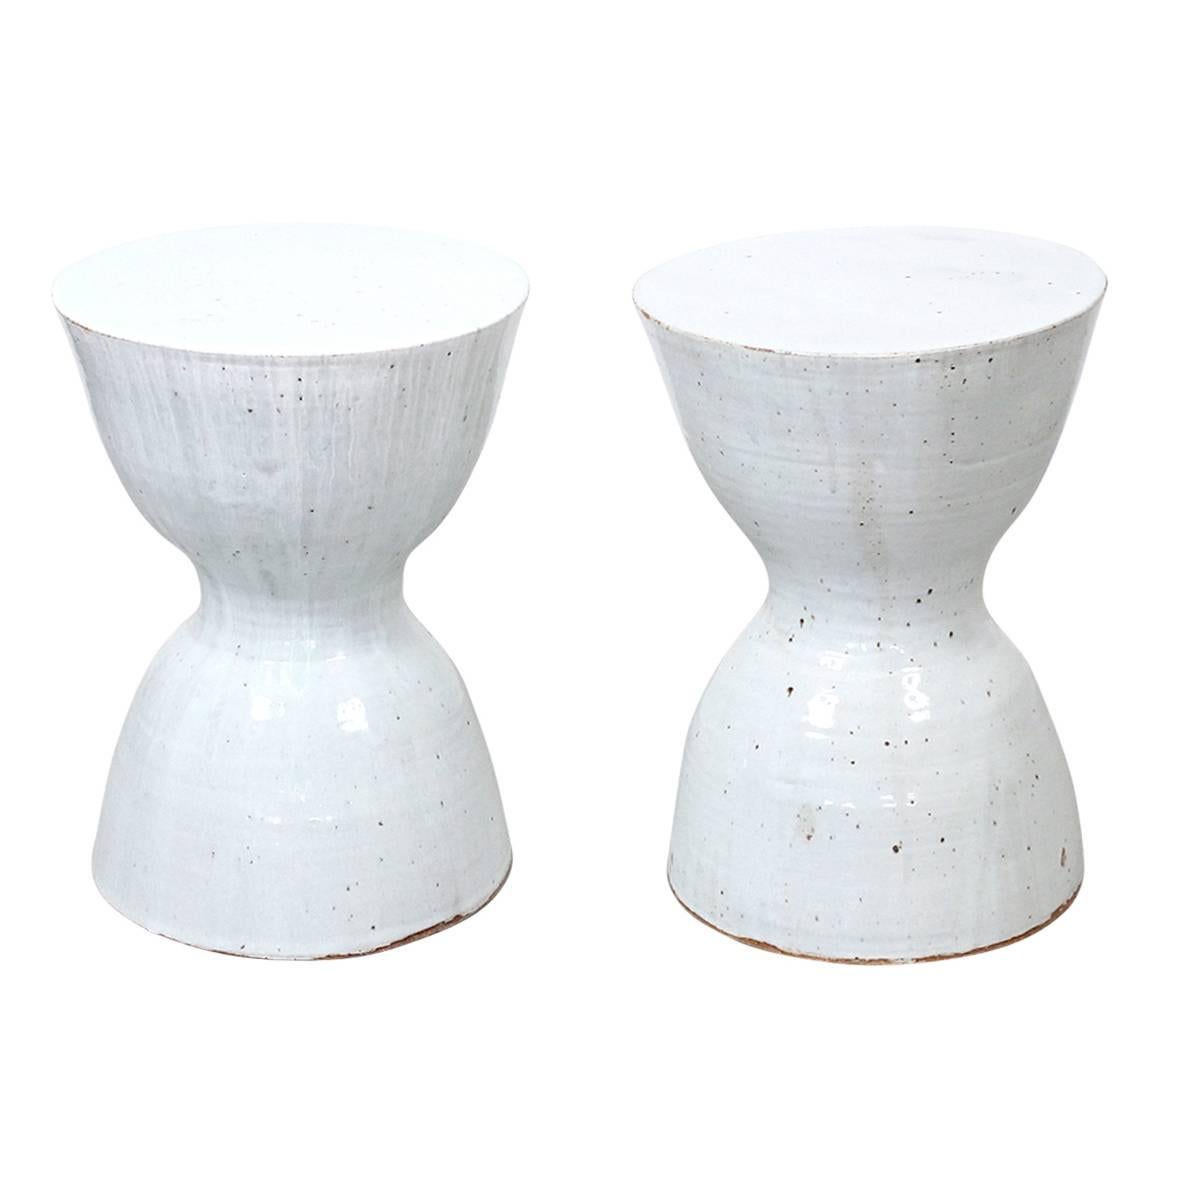 Pair of Tariki Ceramic Stools